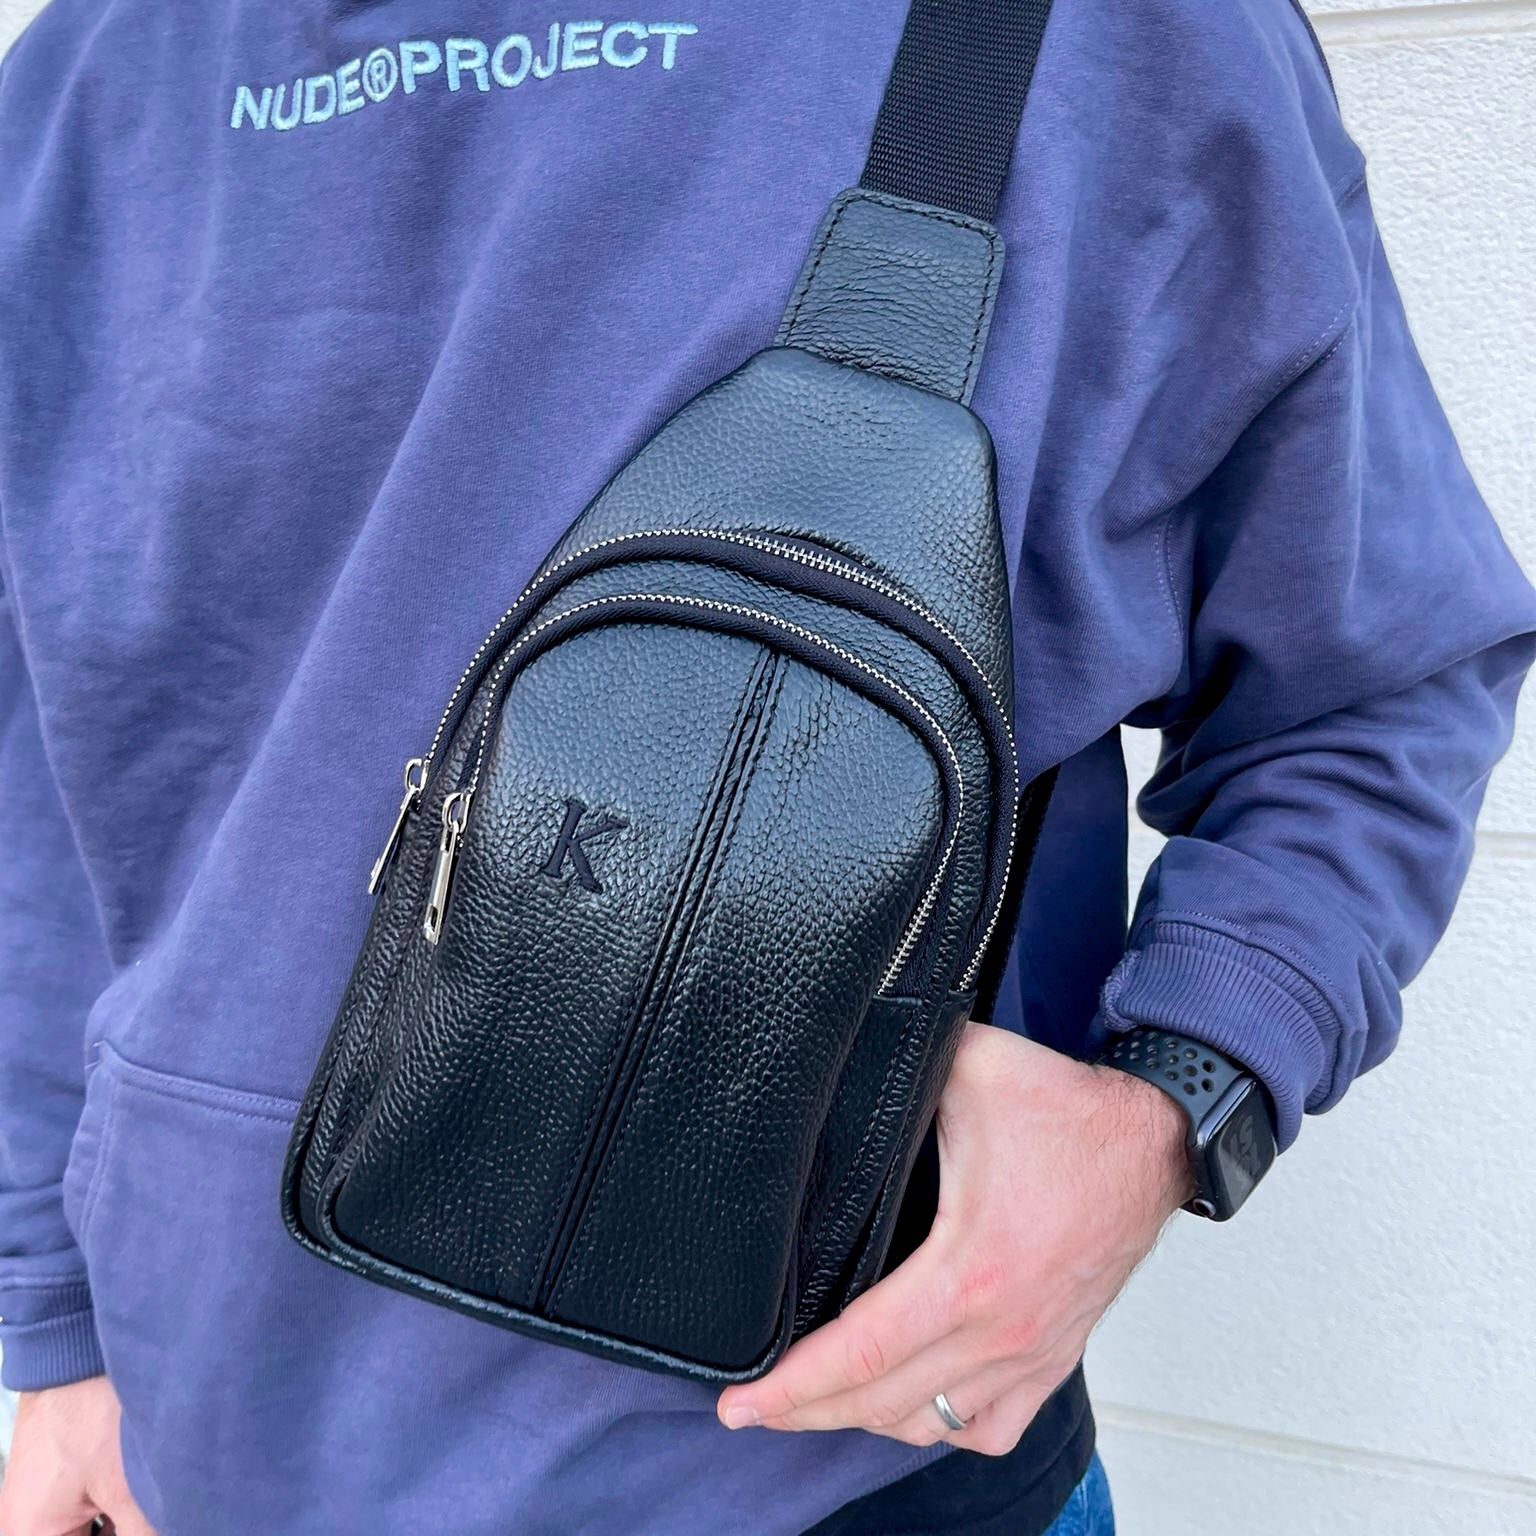 Bolso mochila negro personalizado iniciales bordadas – Bubbleshopbcn